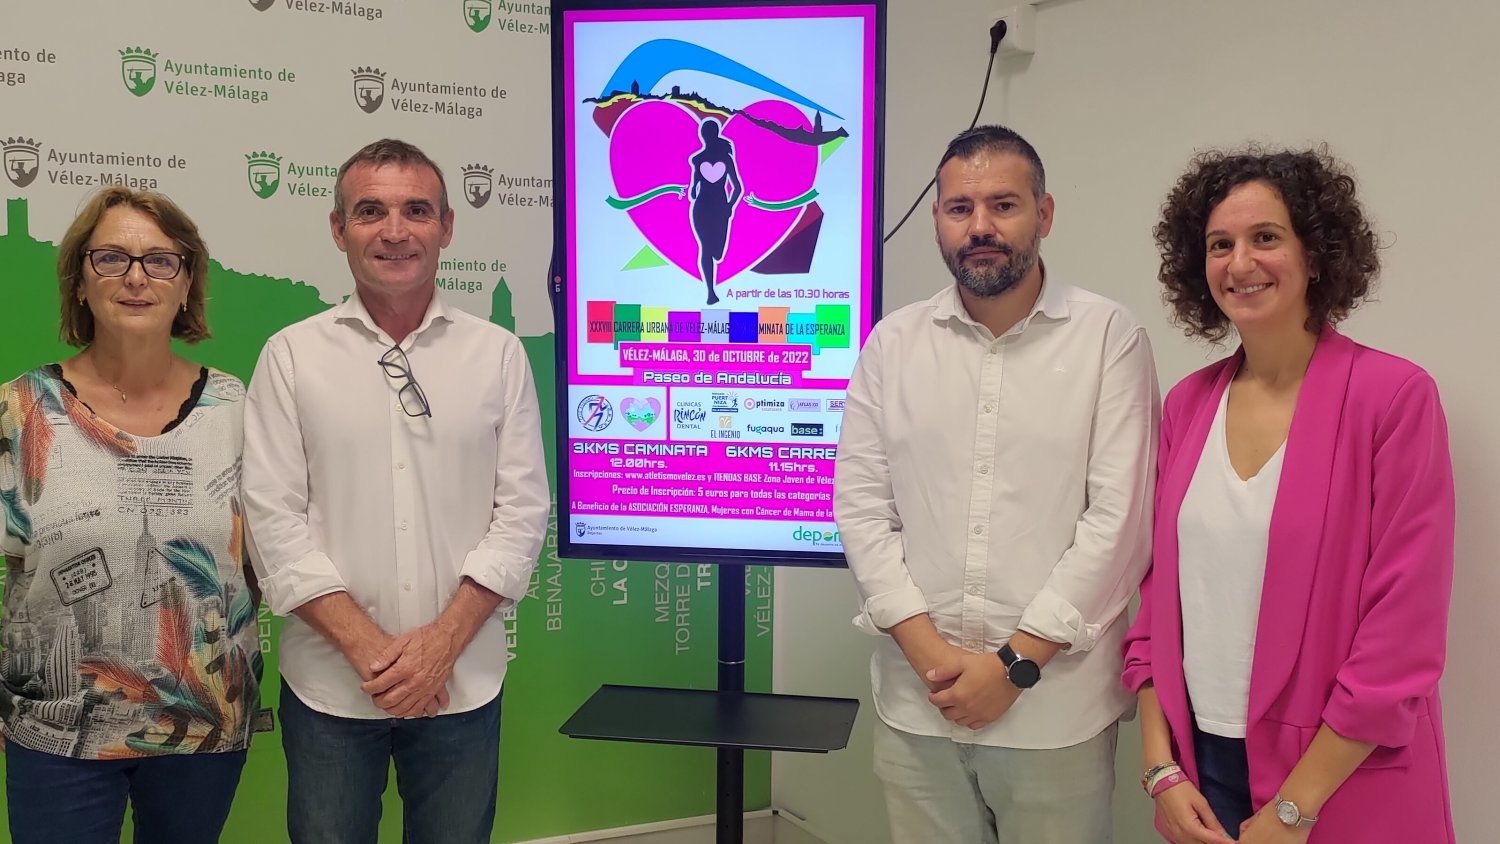 Vélez-Málaga presenta la XXXVIII Carrera Urbana y la XI Caminata de la Esperanza